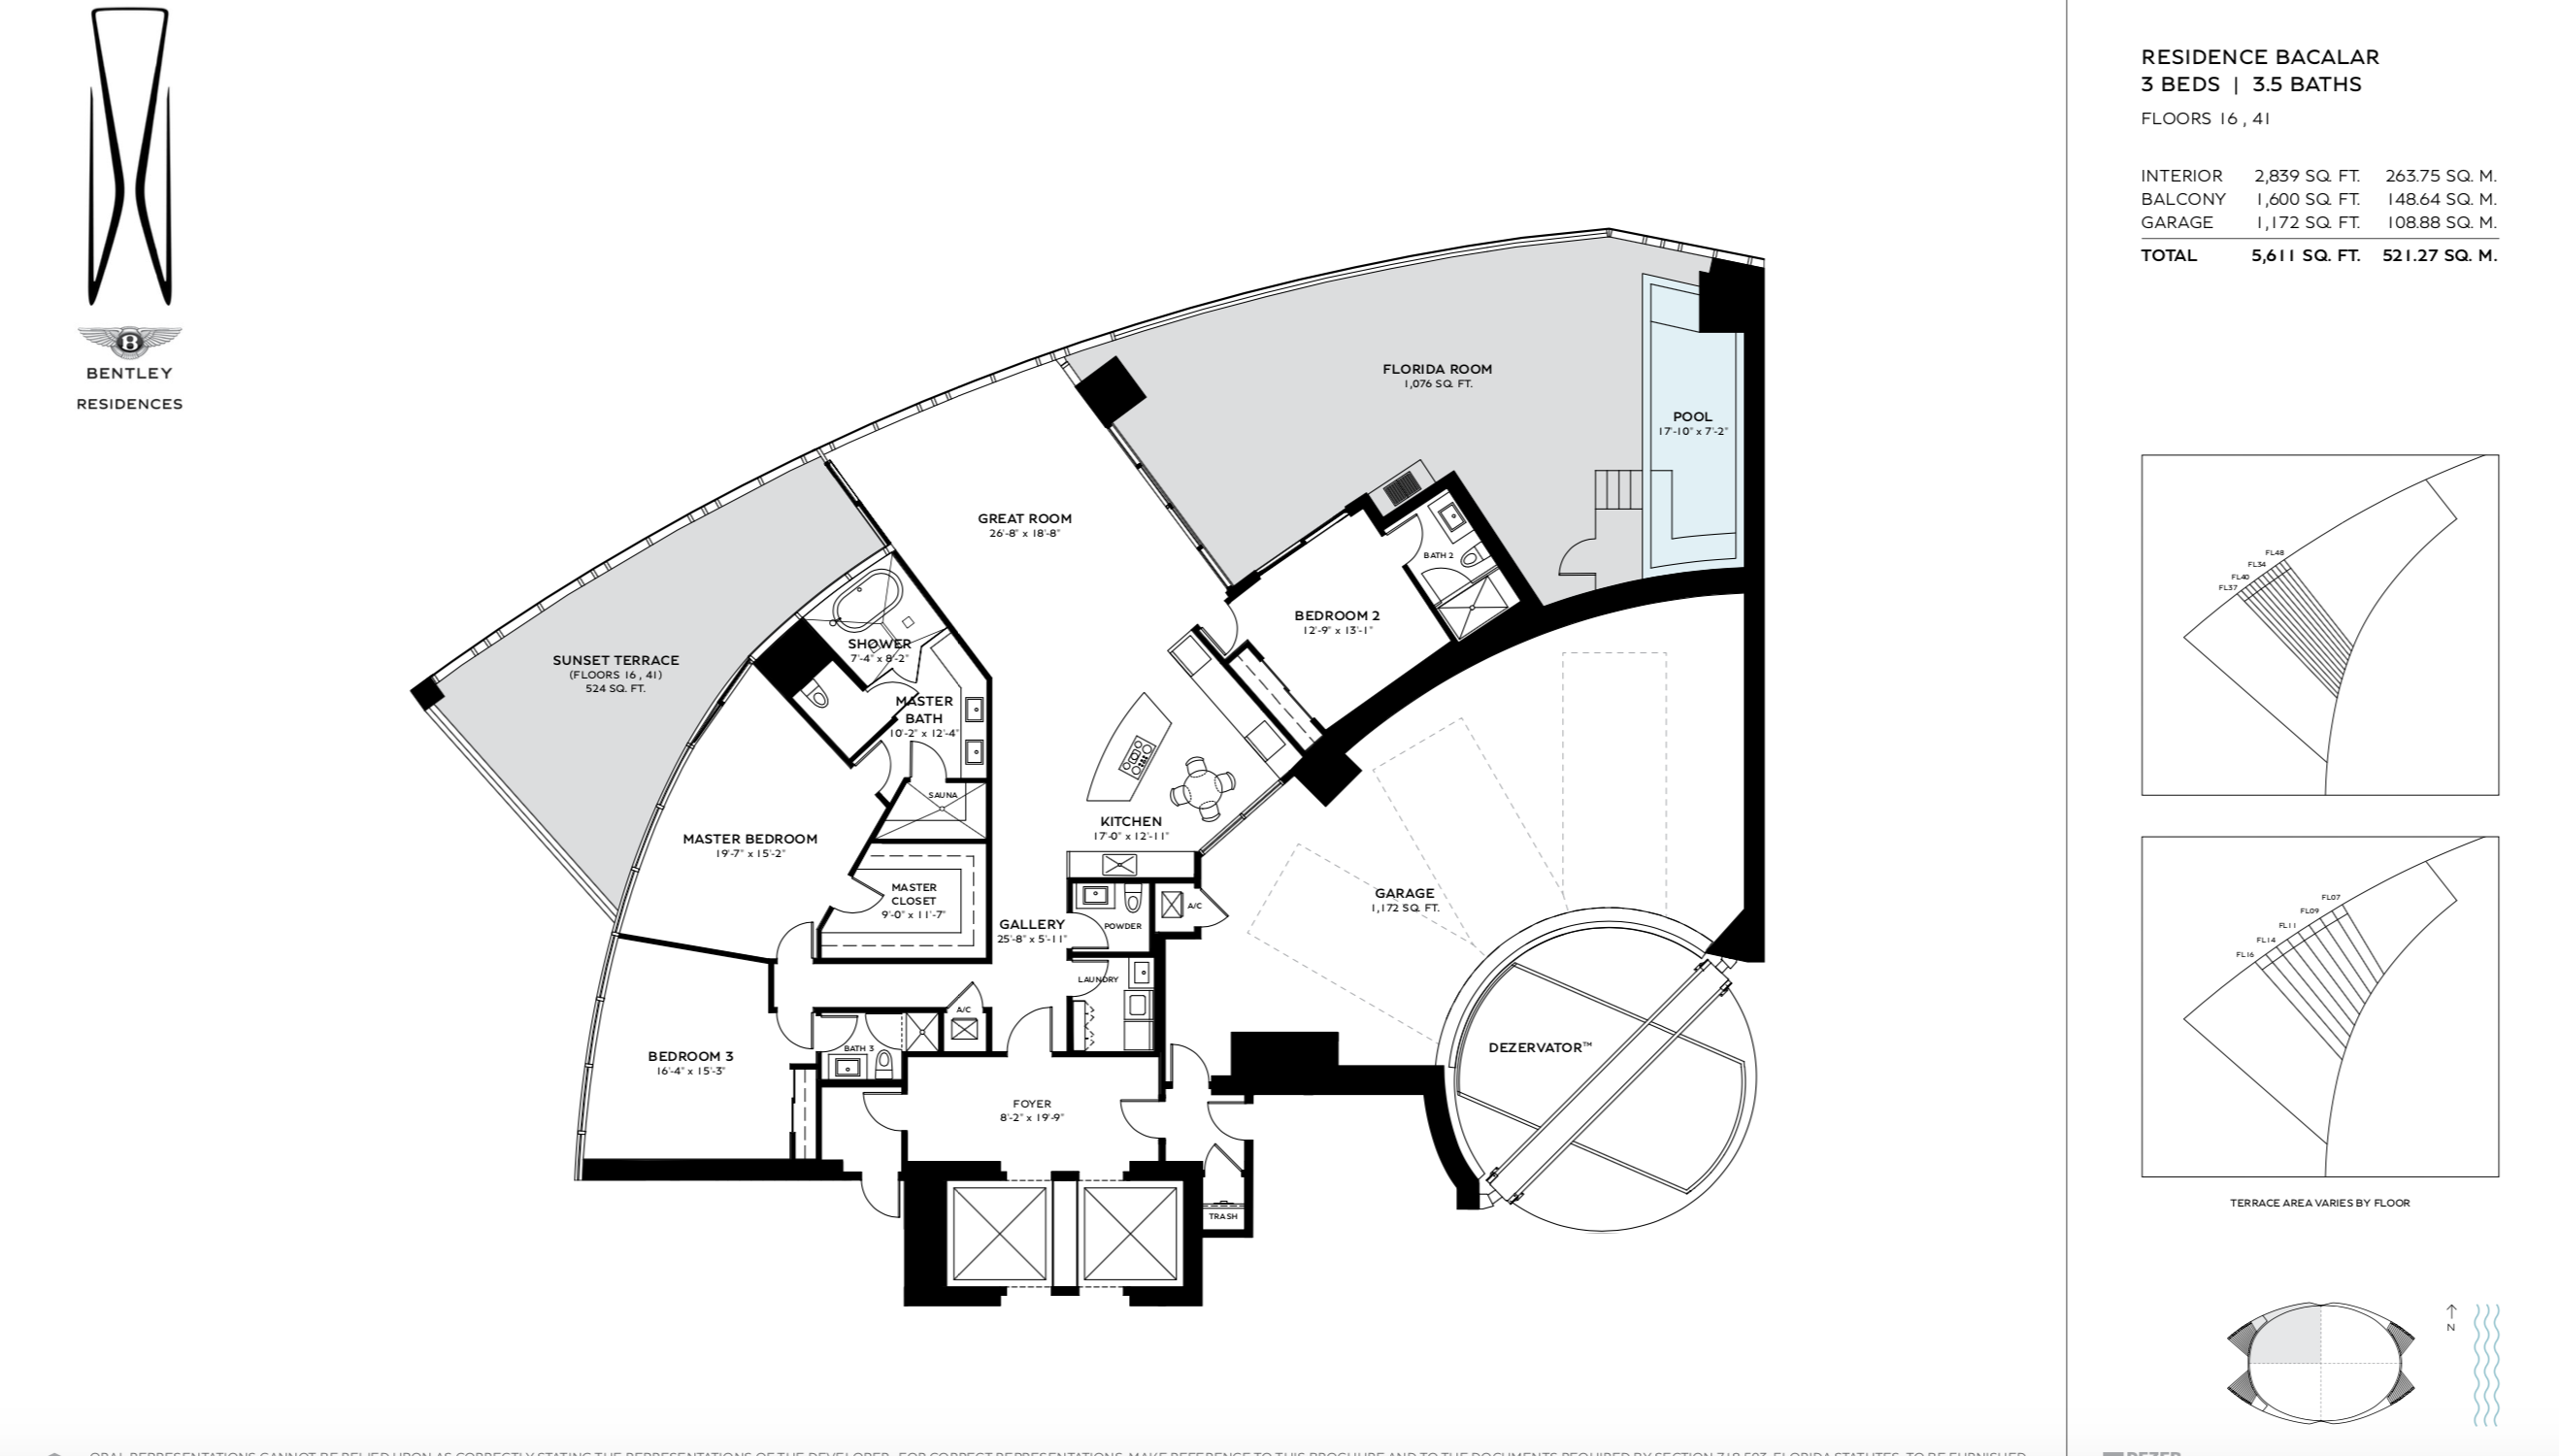 Bentley Residences Sunny Isles  | Residence Bacalar | NW Exposure | 3 Be/3.5Ba | 2,839 SF | Floors 16 & 41